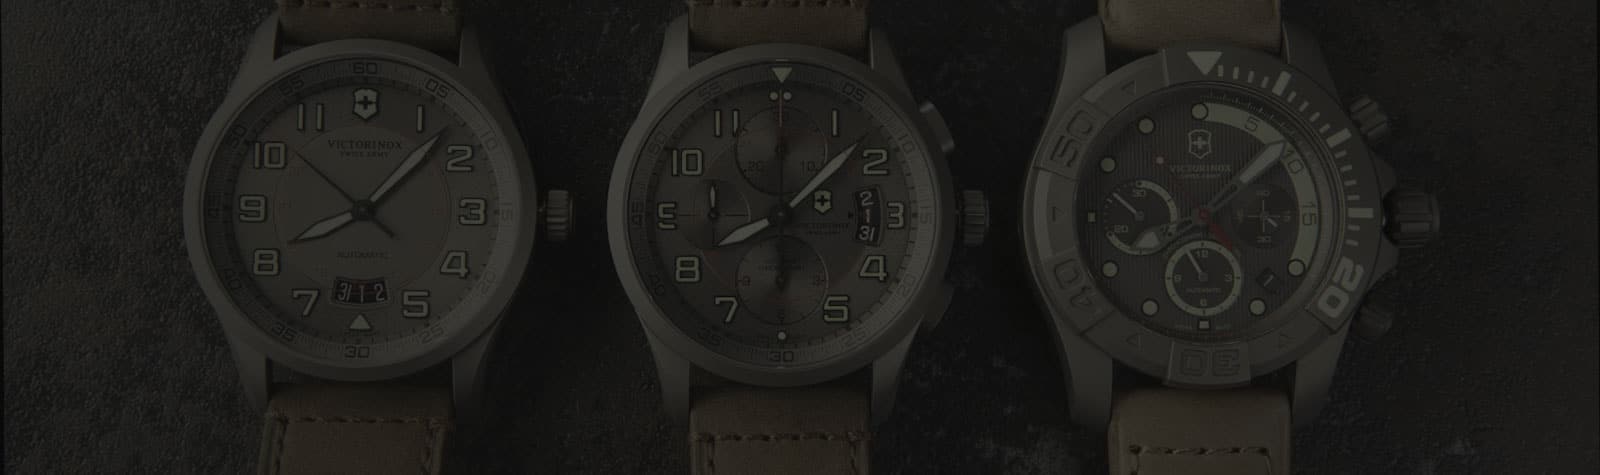 WATCH DESIGN: Victorinox Swiss Army’s Titanium Watches Circa 2013-2014